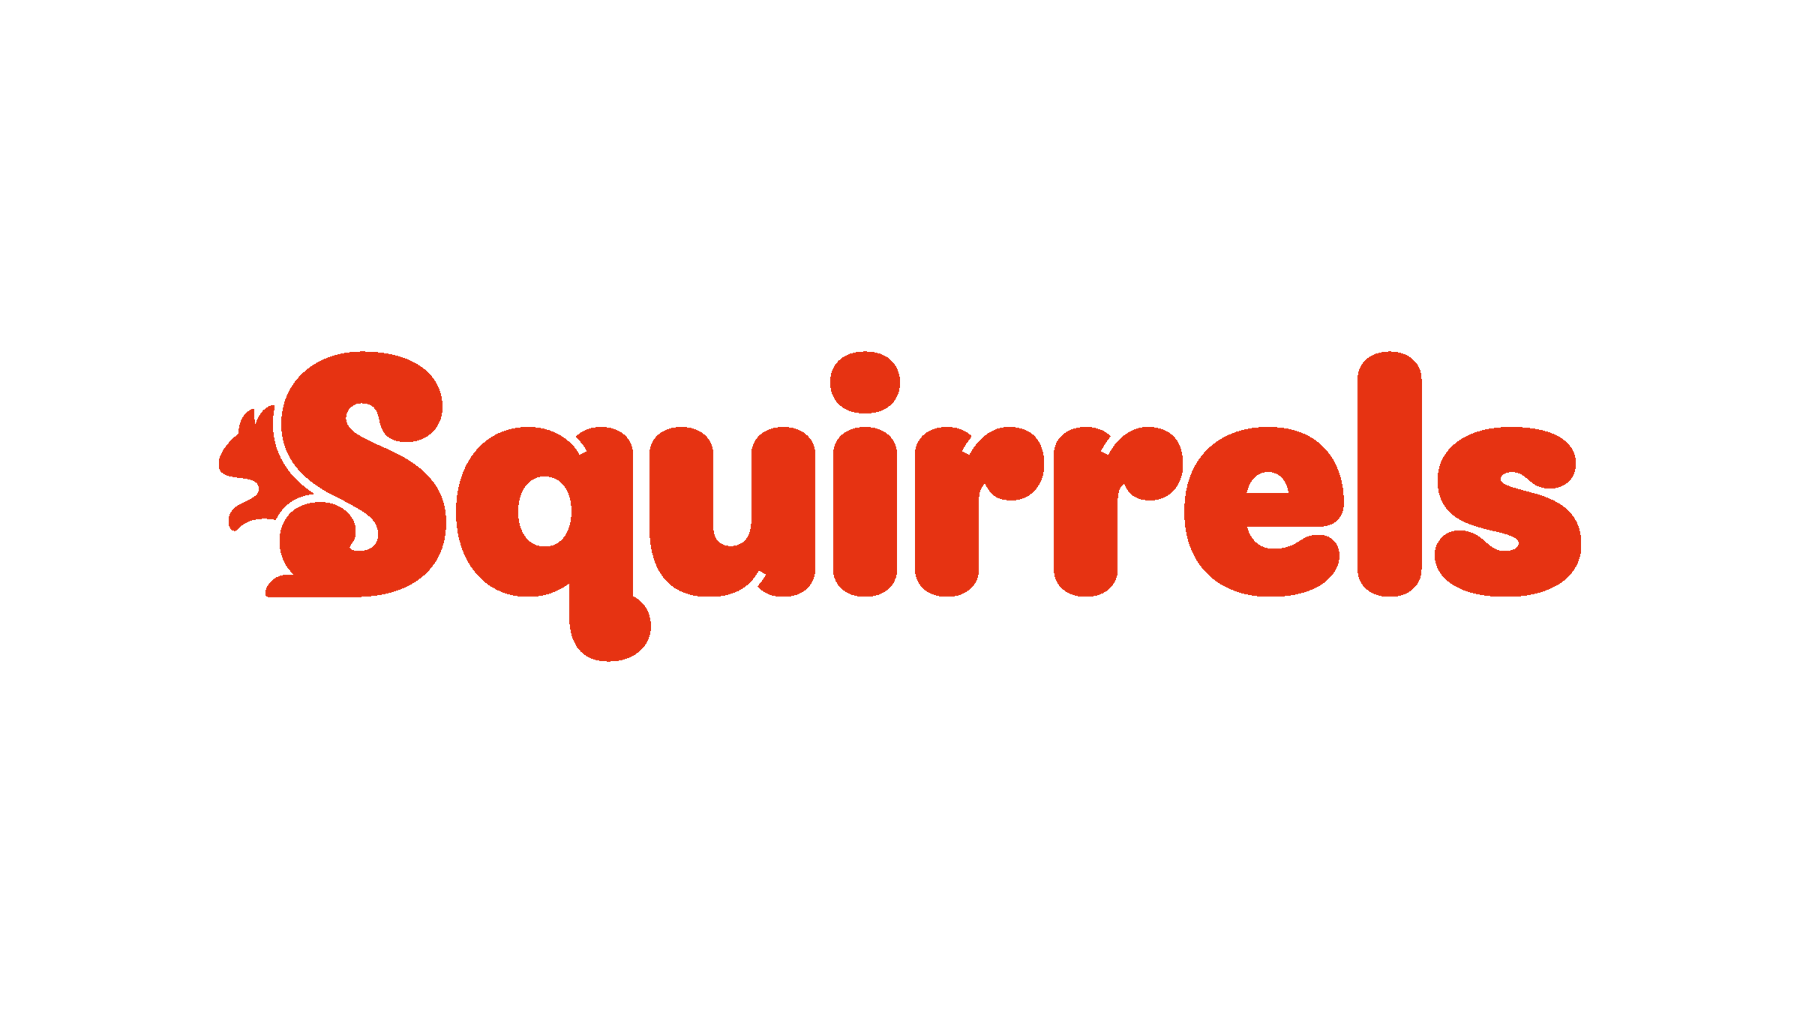 The Squirrels logo.